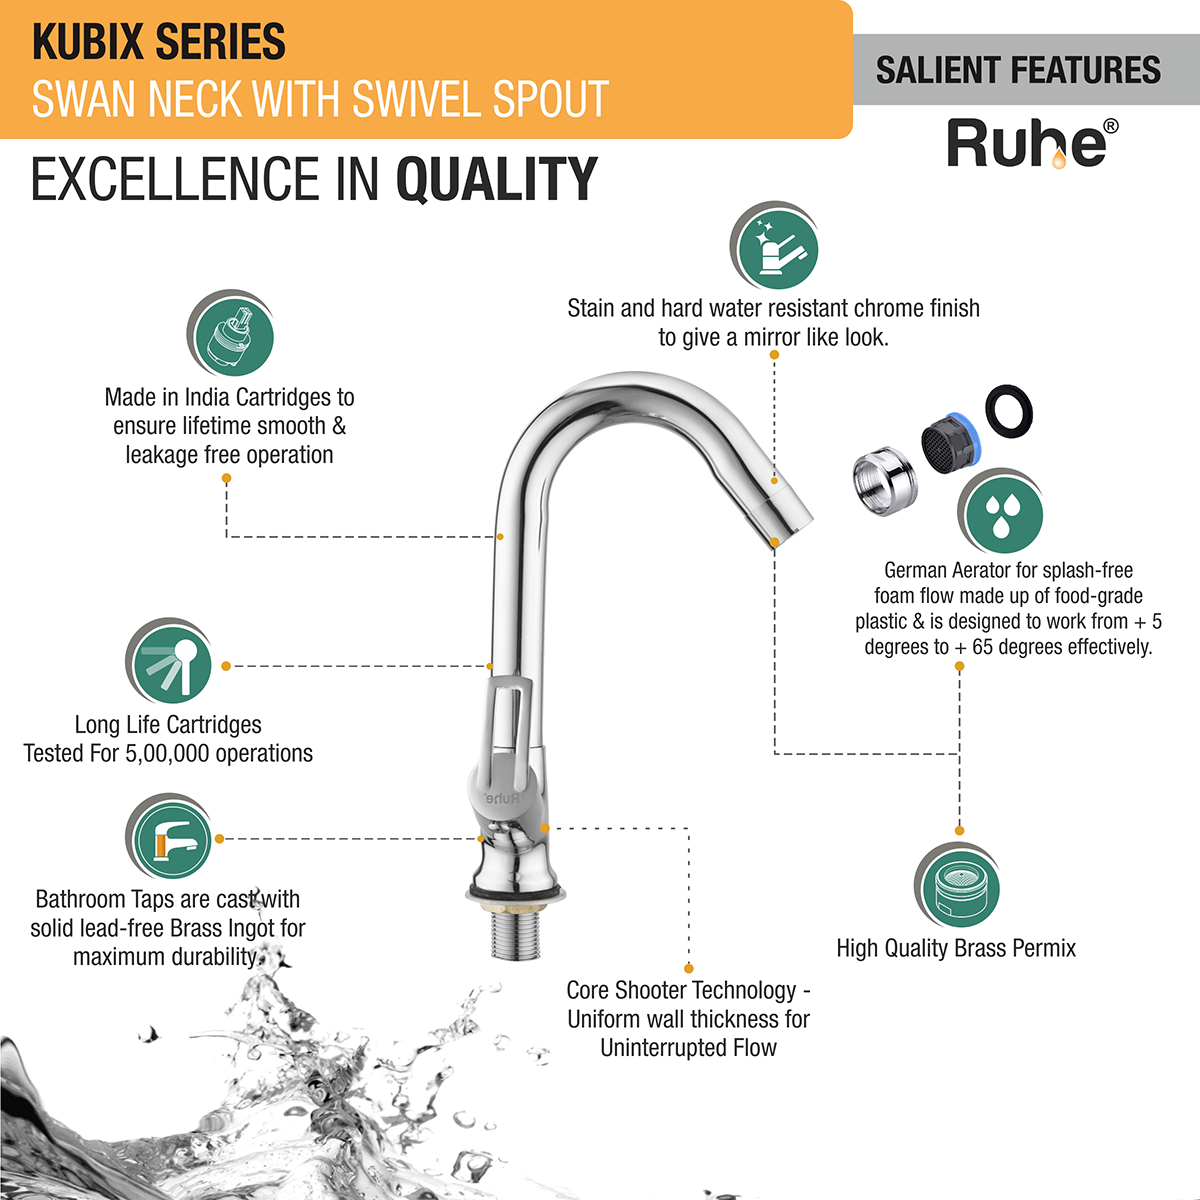 Kubix Swan Neck with Swivel Spout Faucet features